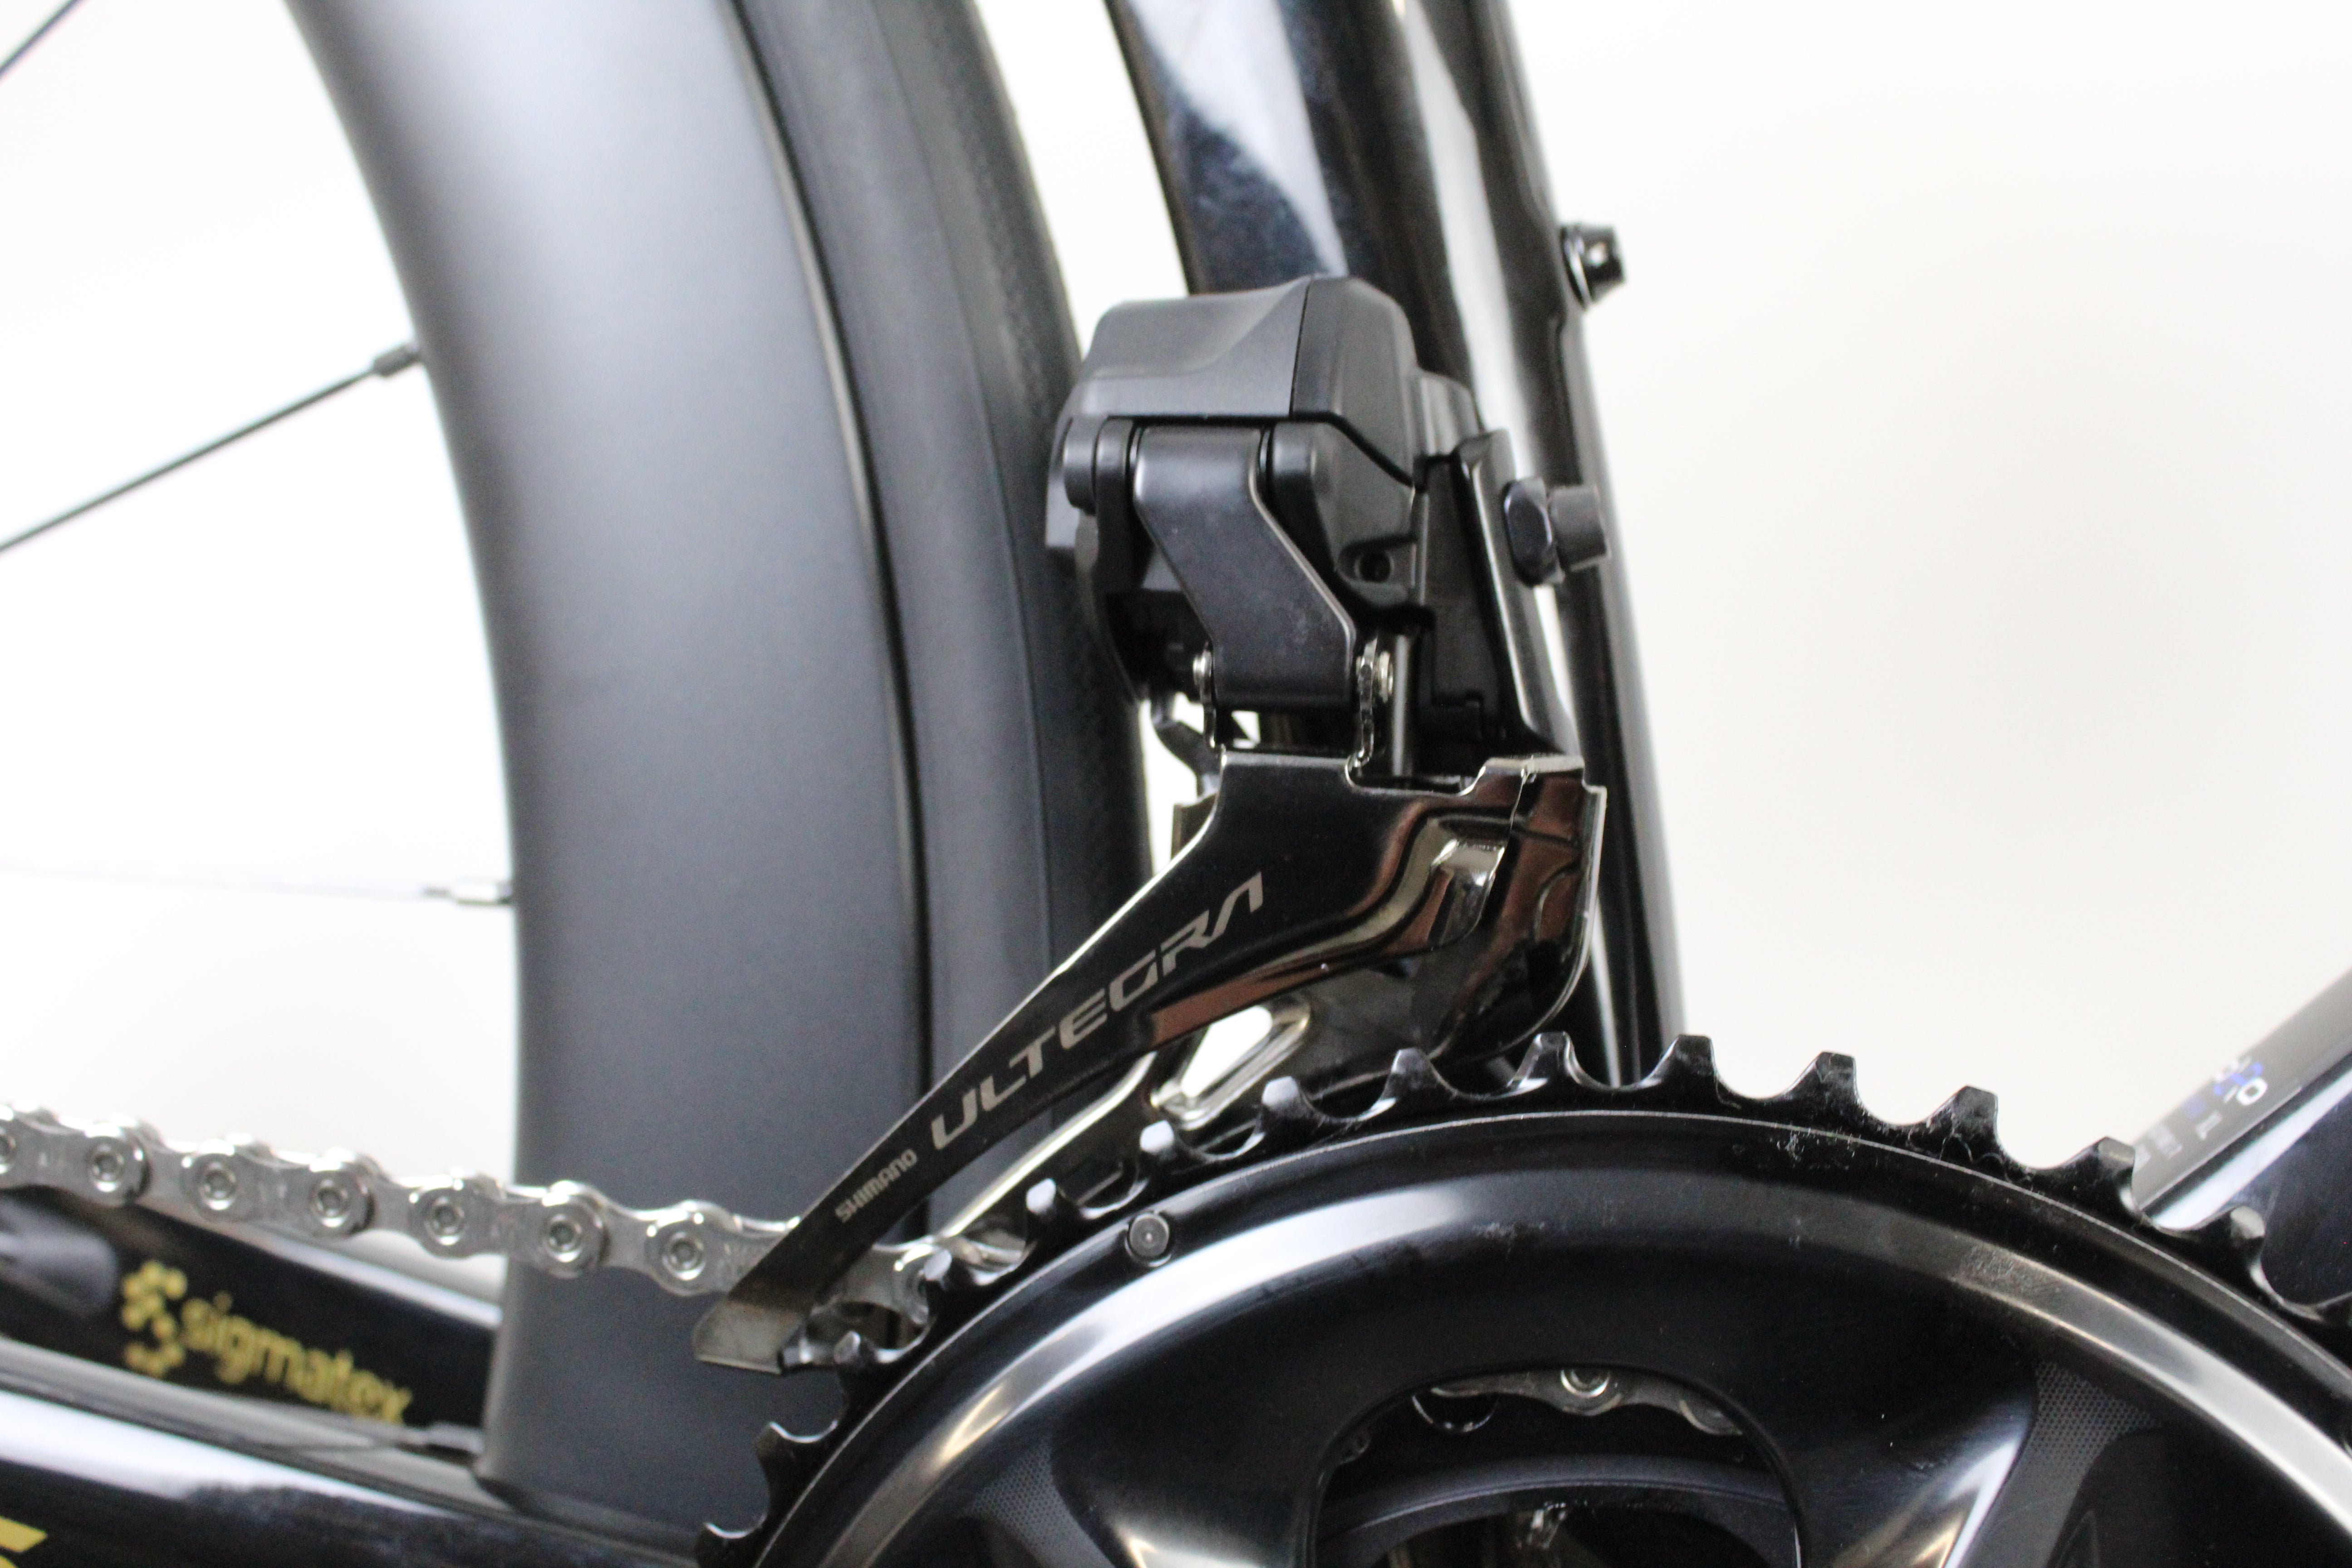 **Stolen** 2024 Carbon Road Bike- Orro Venturi STC Ultegra Di2 XL 7.6kg - New